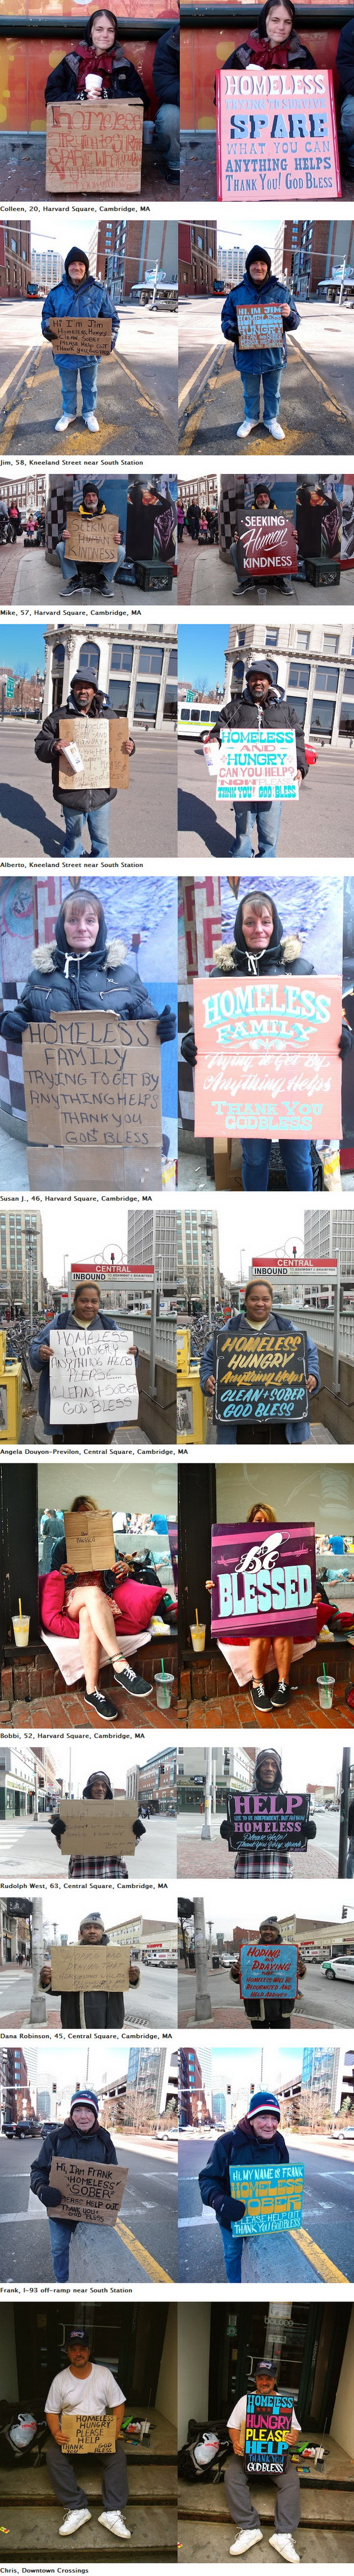 signs for the homeless02_resize.jpg